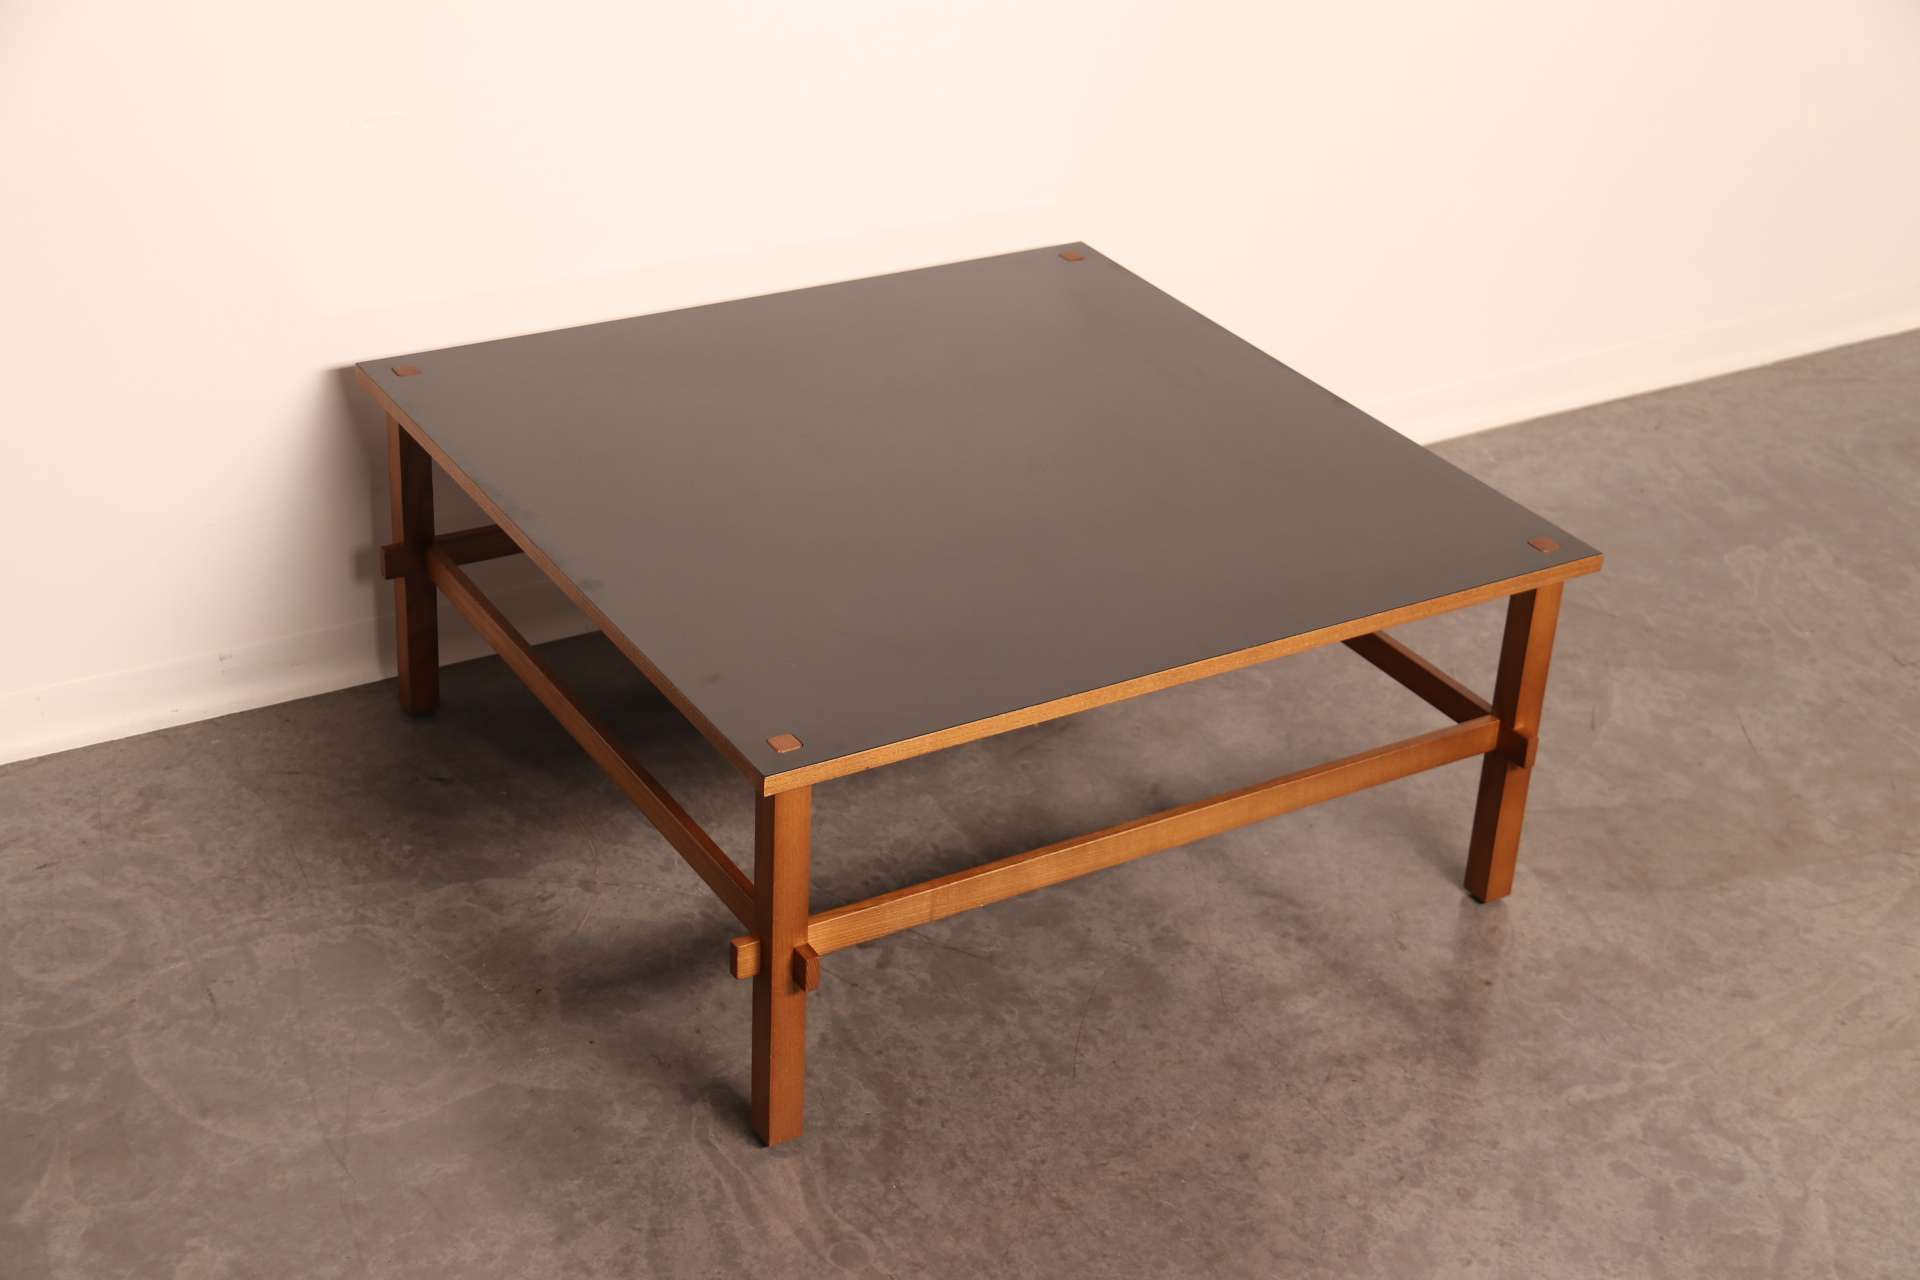 Gio coffee table design Frattini Cassina (3)